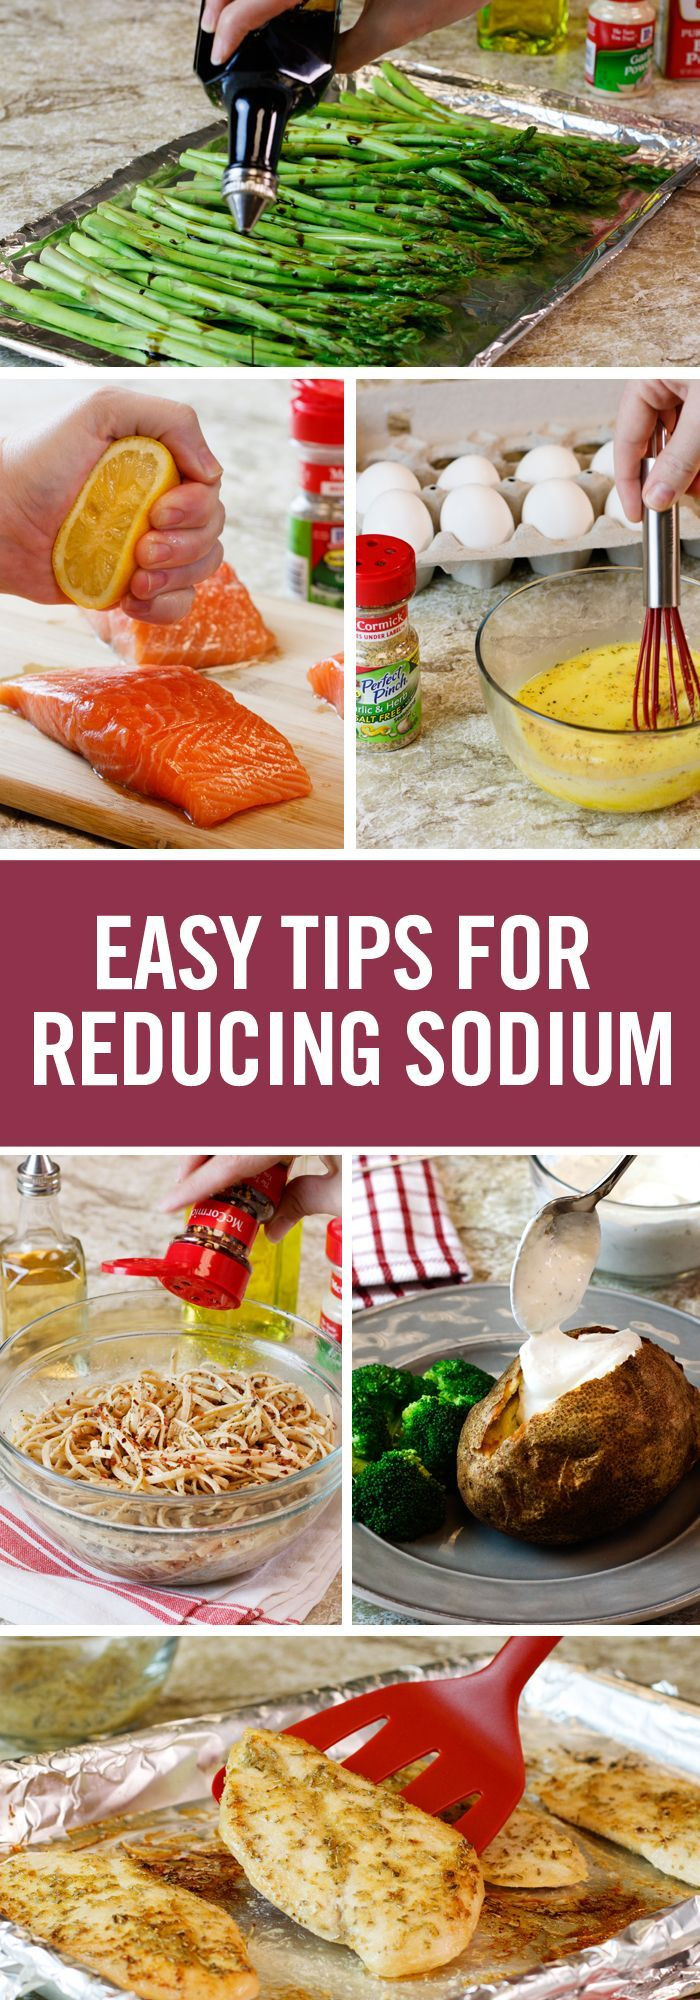 Low Sodium Dinner Ideas
 31 best Lower Sodium Recipes images on Pinterest